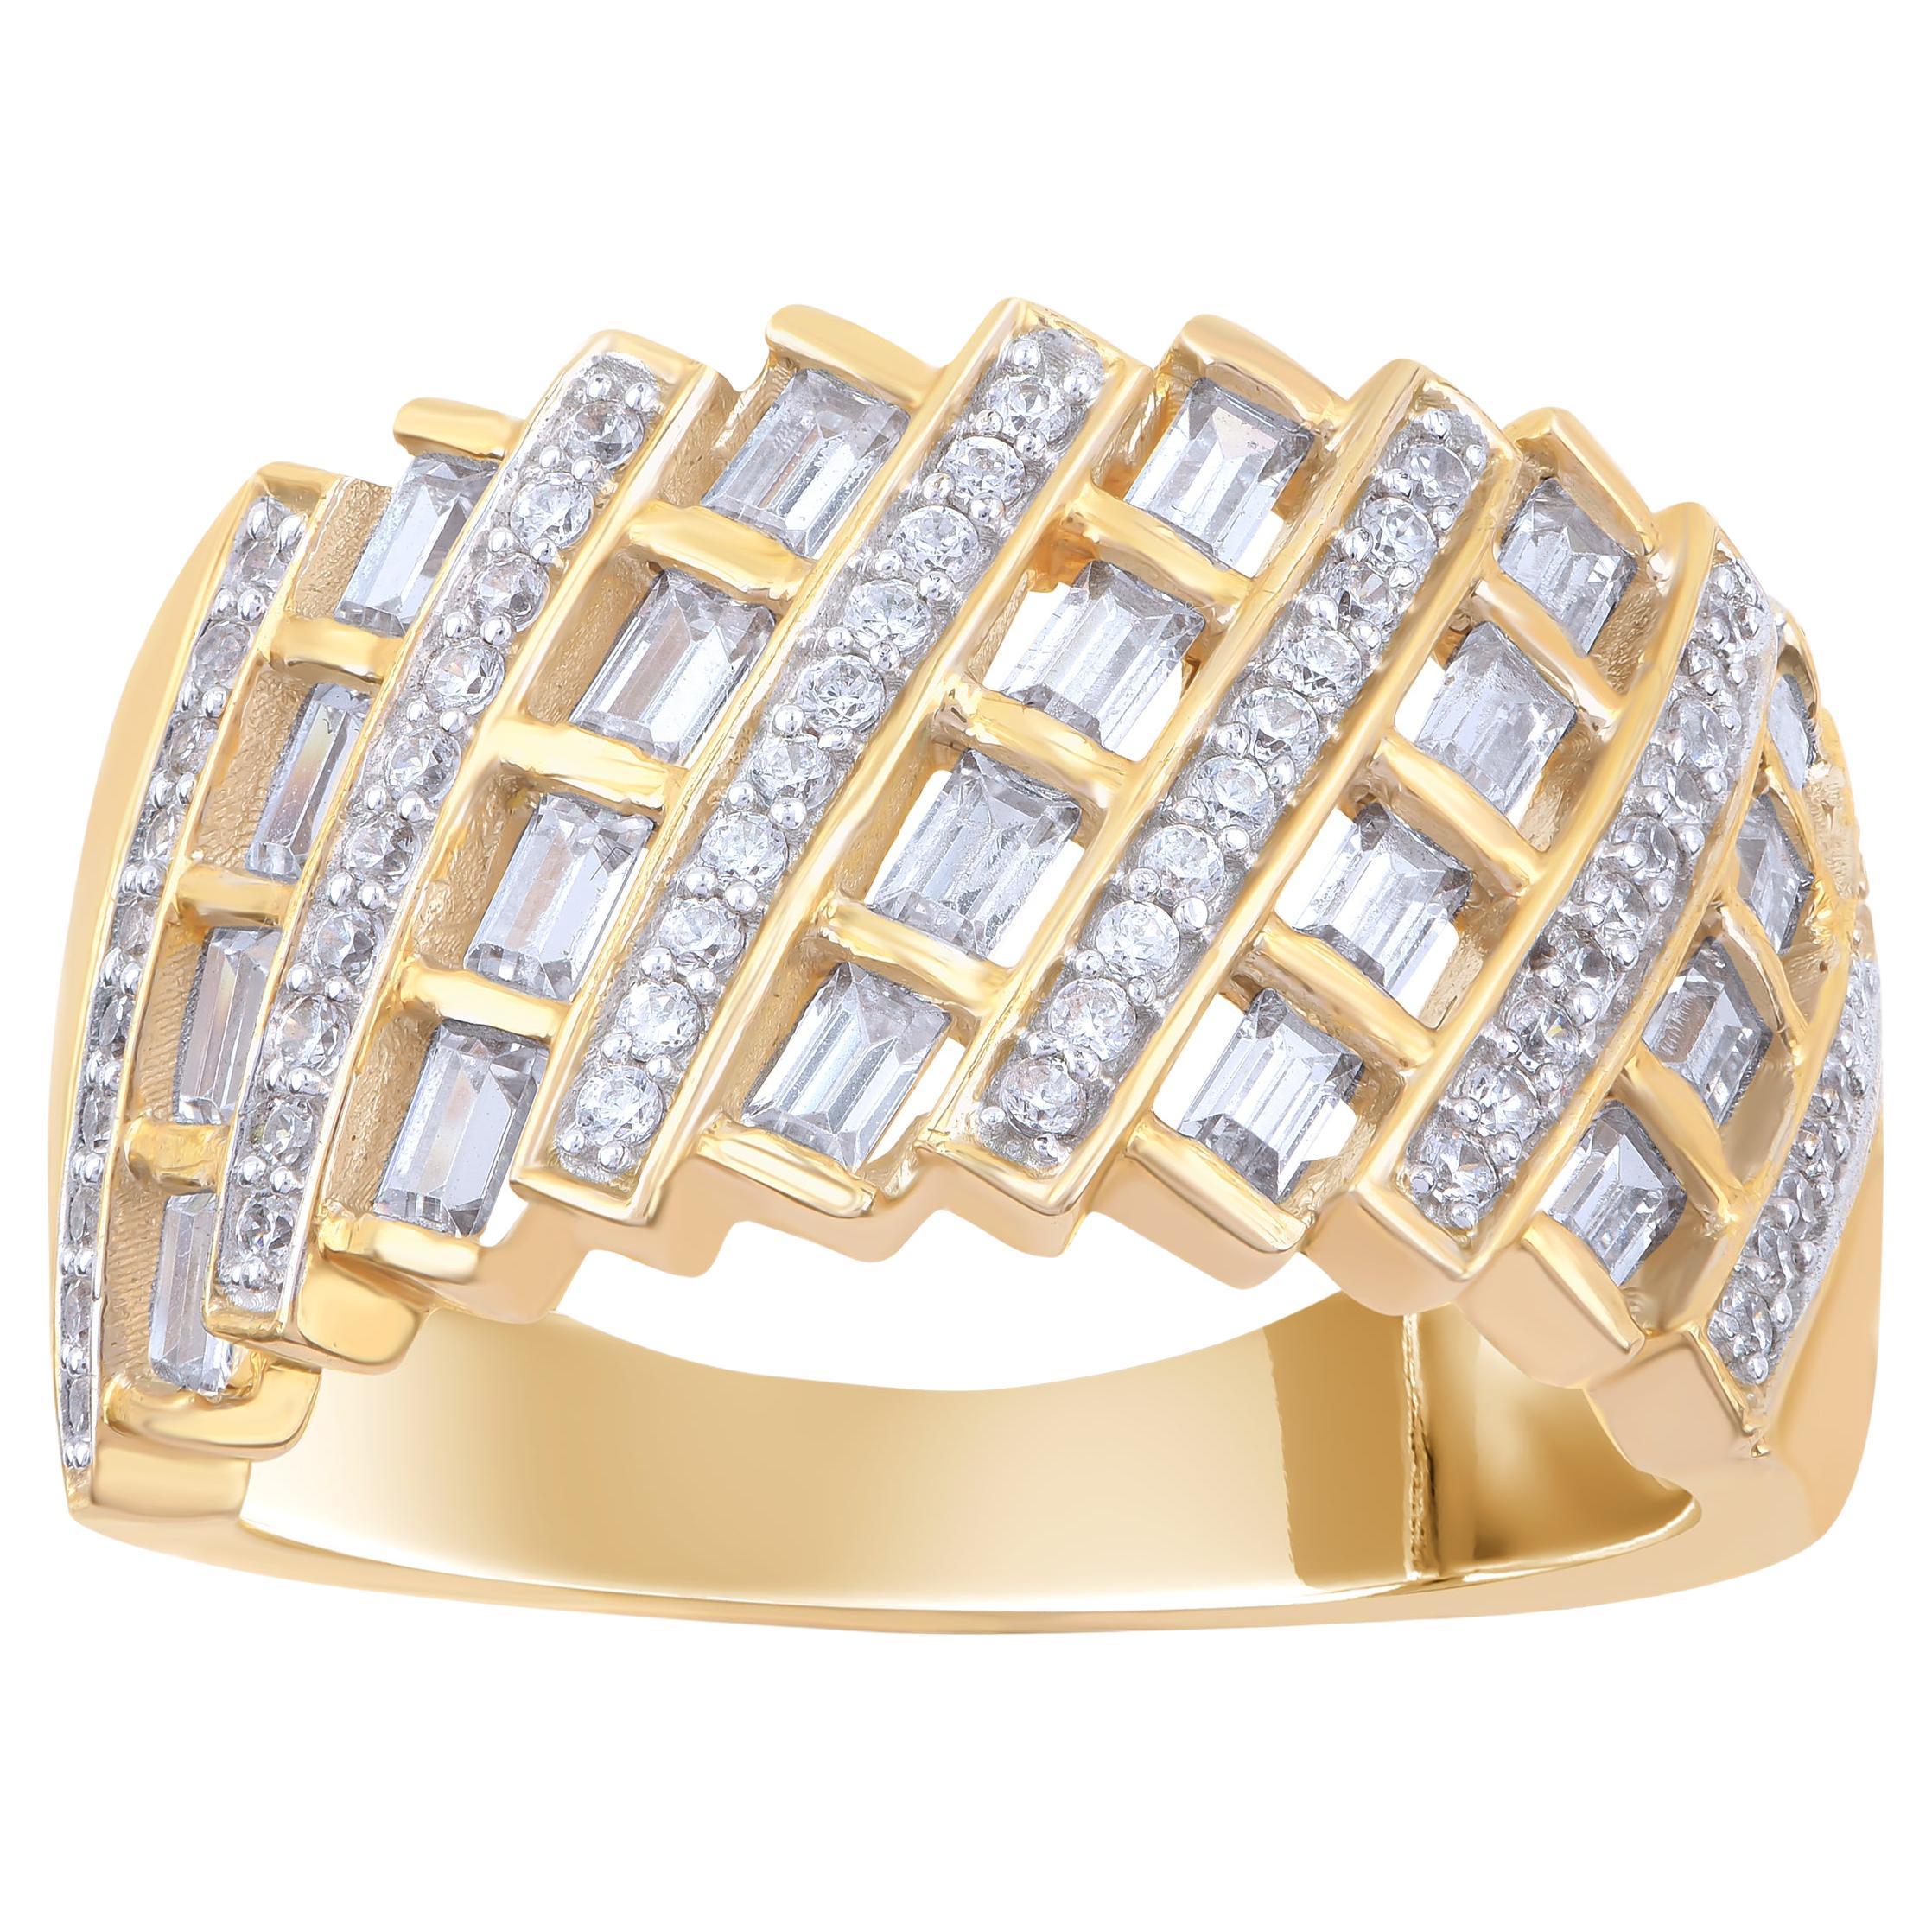 TJD 1.0 Carat Round & Baguette Cut Diamond 14KT Yellow Gold Wedding Band Ring